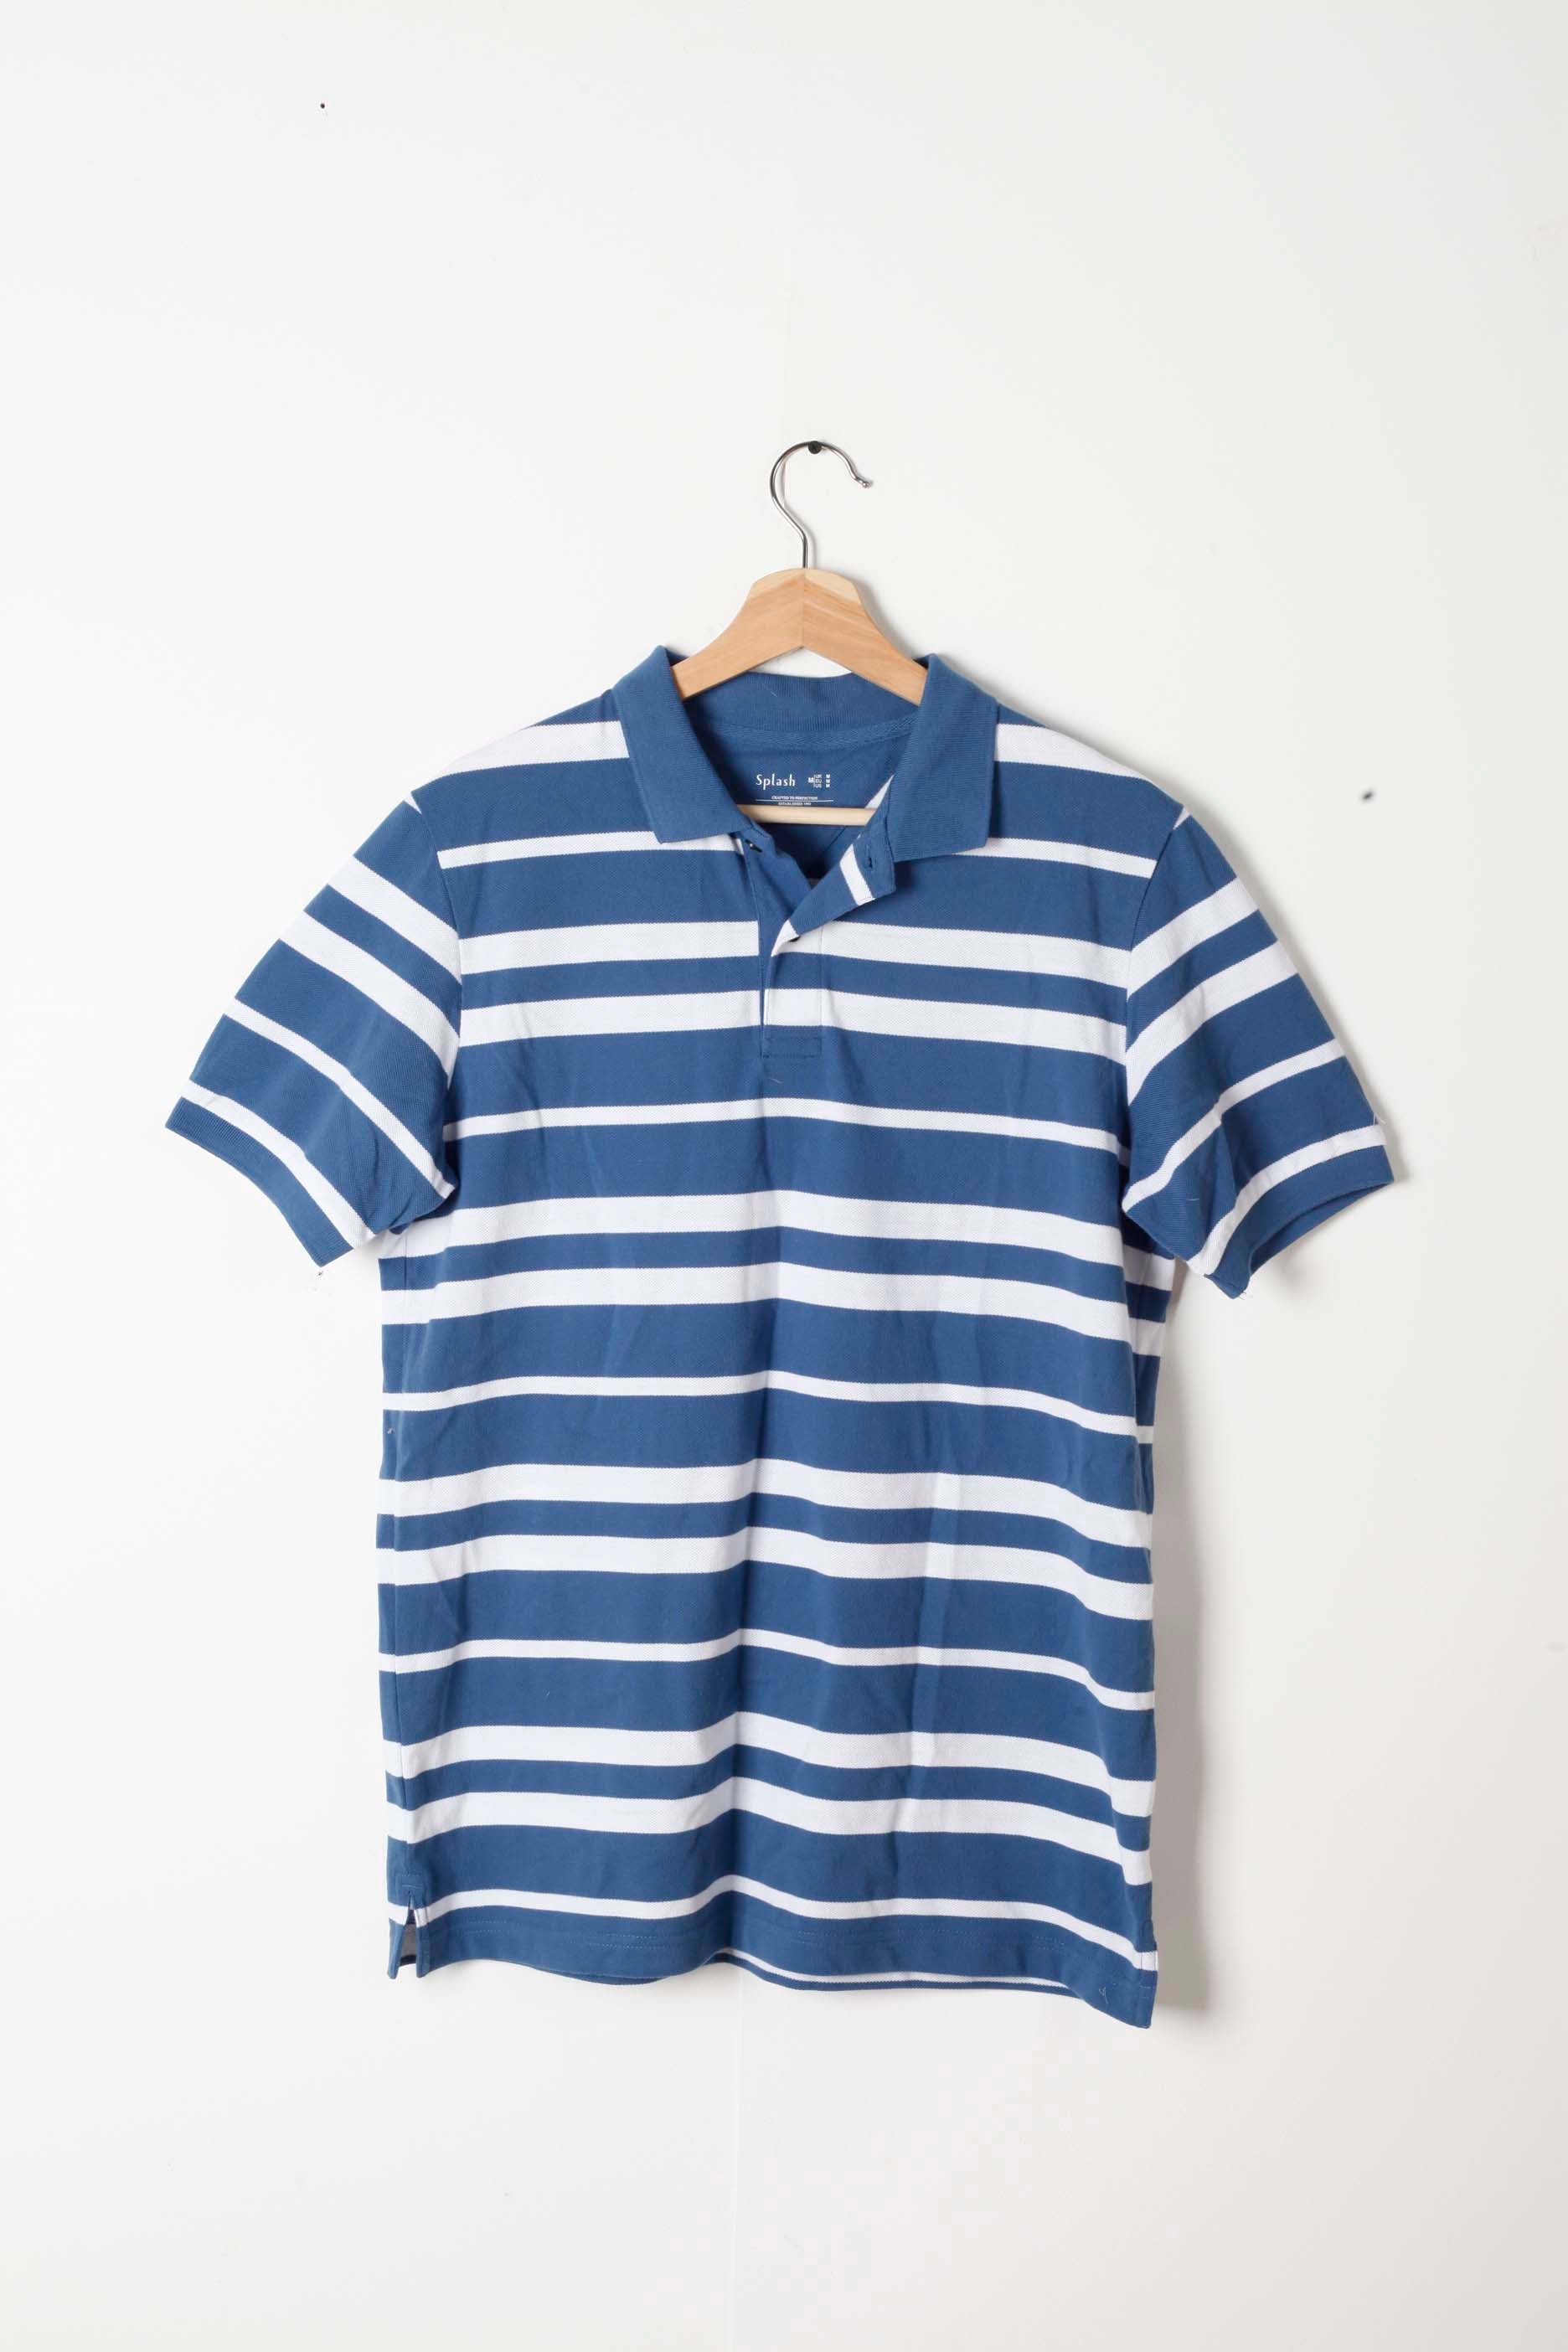 Mens Blue and White Stripe Polo Shirt (Medium)